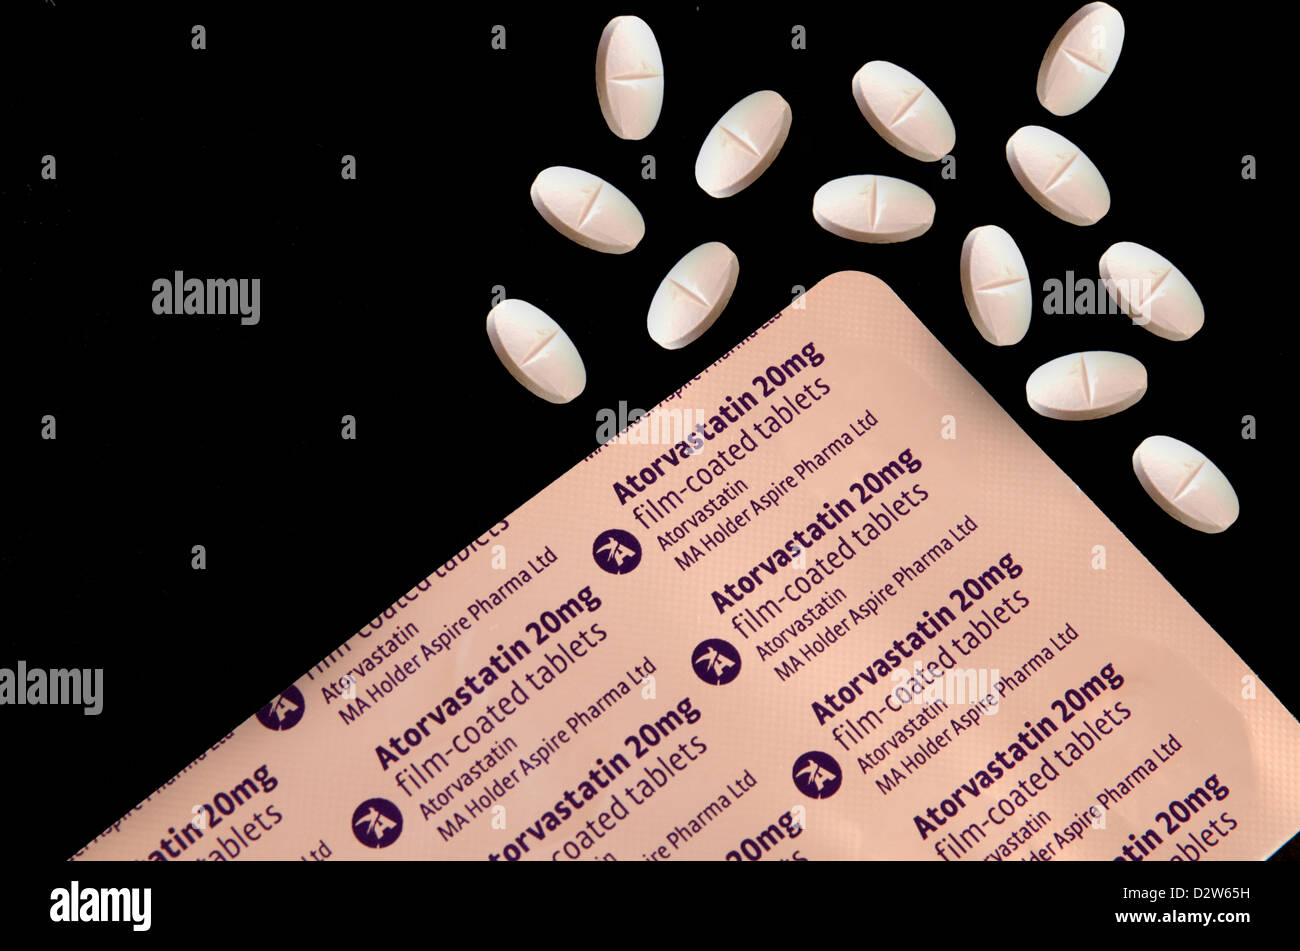 Aspire pharma fotografías e imágenes de alta resolución - Alamy